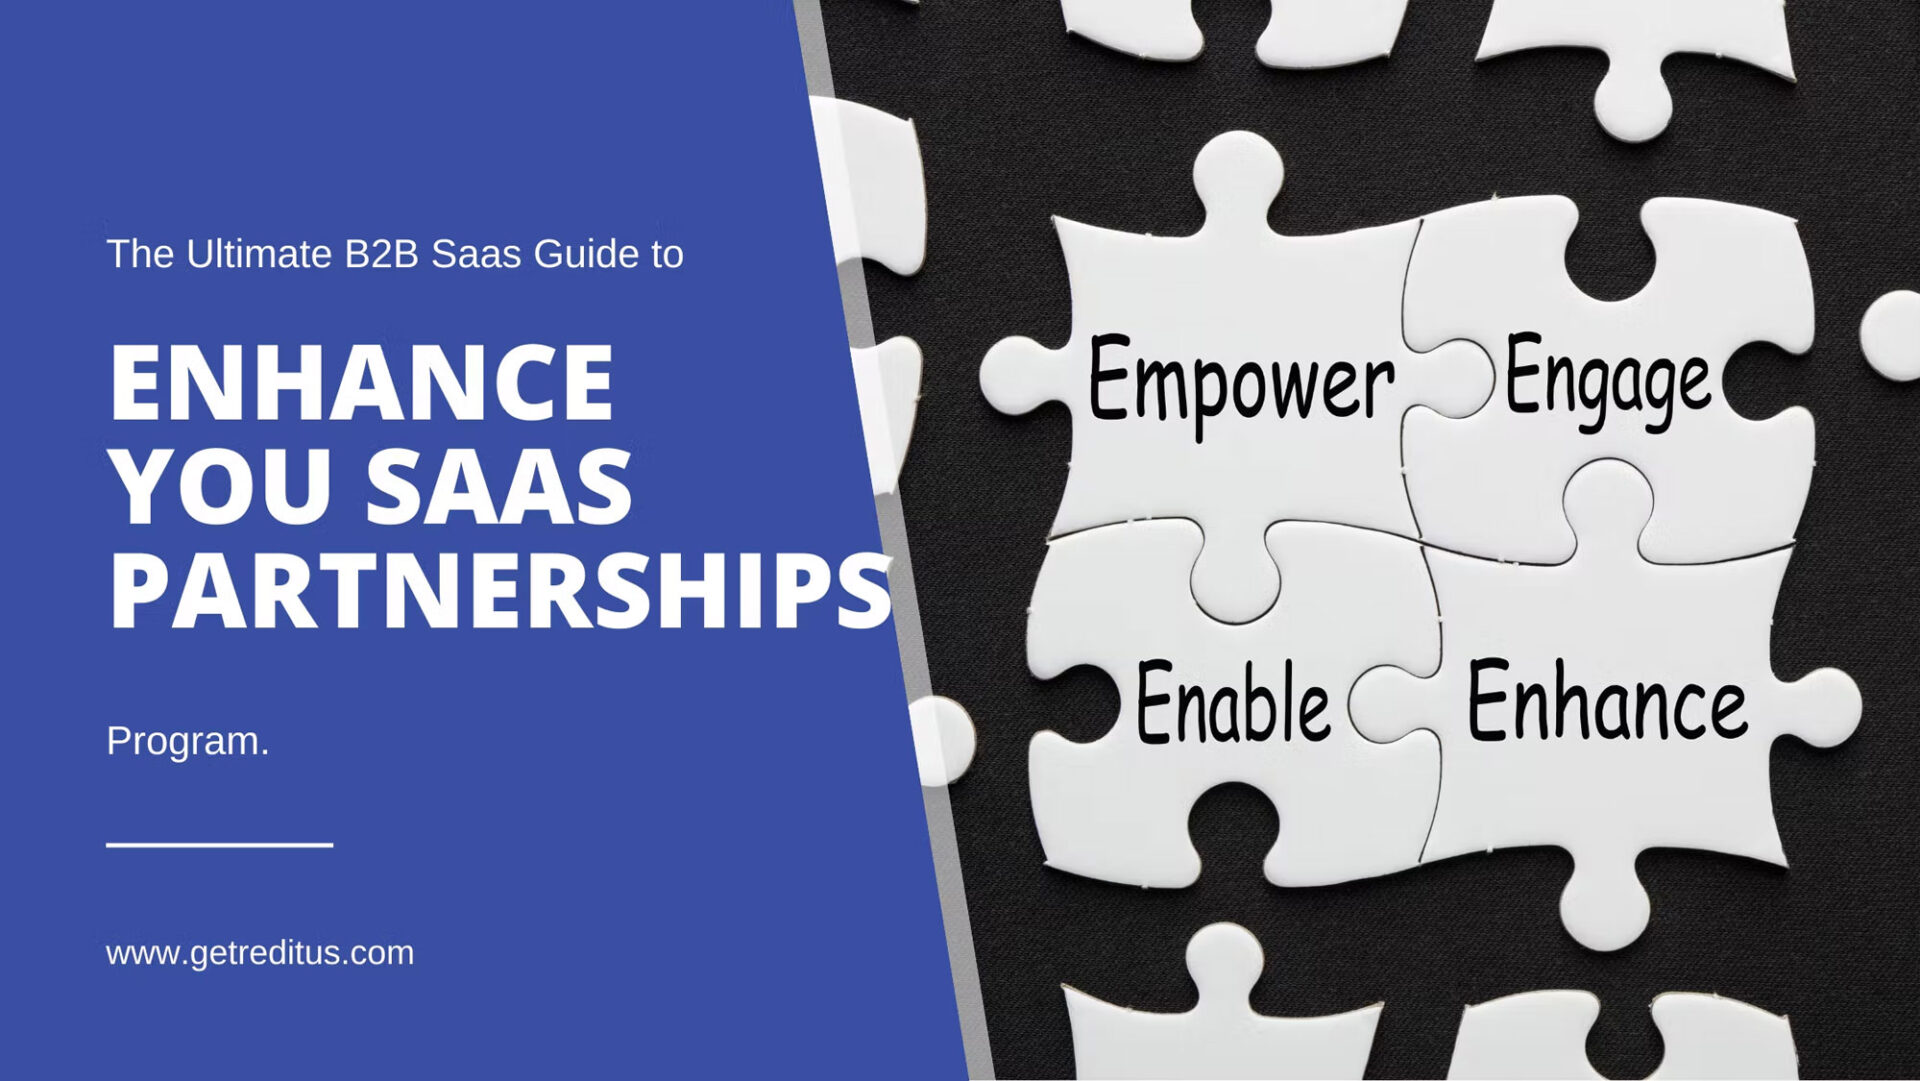 The Ultimate B2B SaaS Guide to Enhance your SaaS Partnership Program